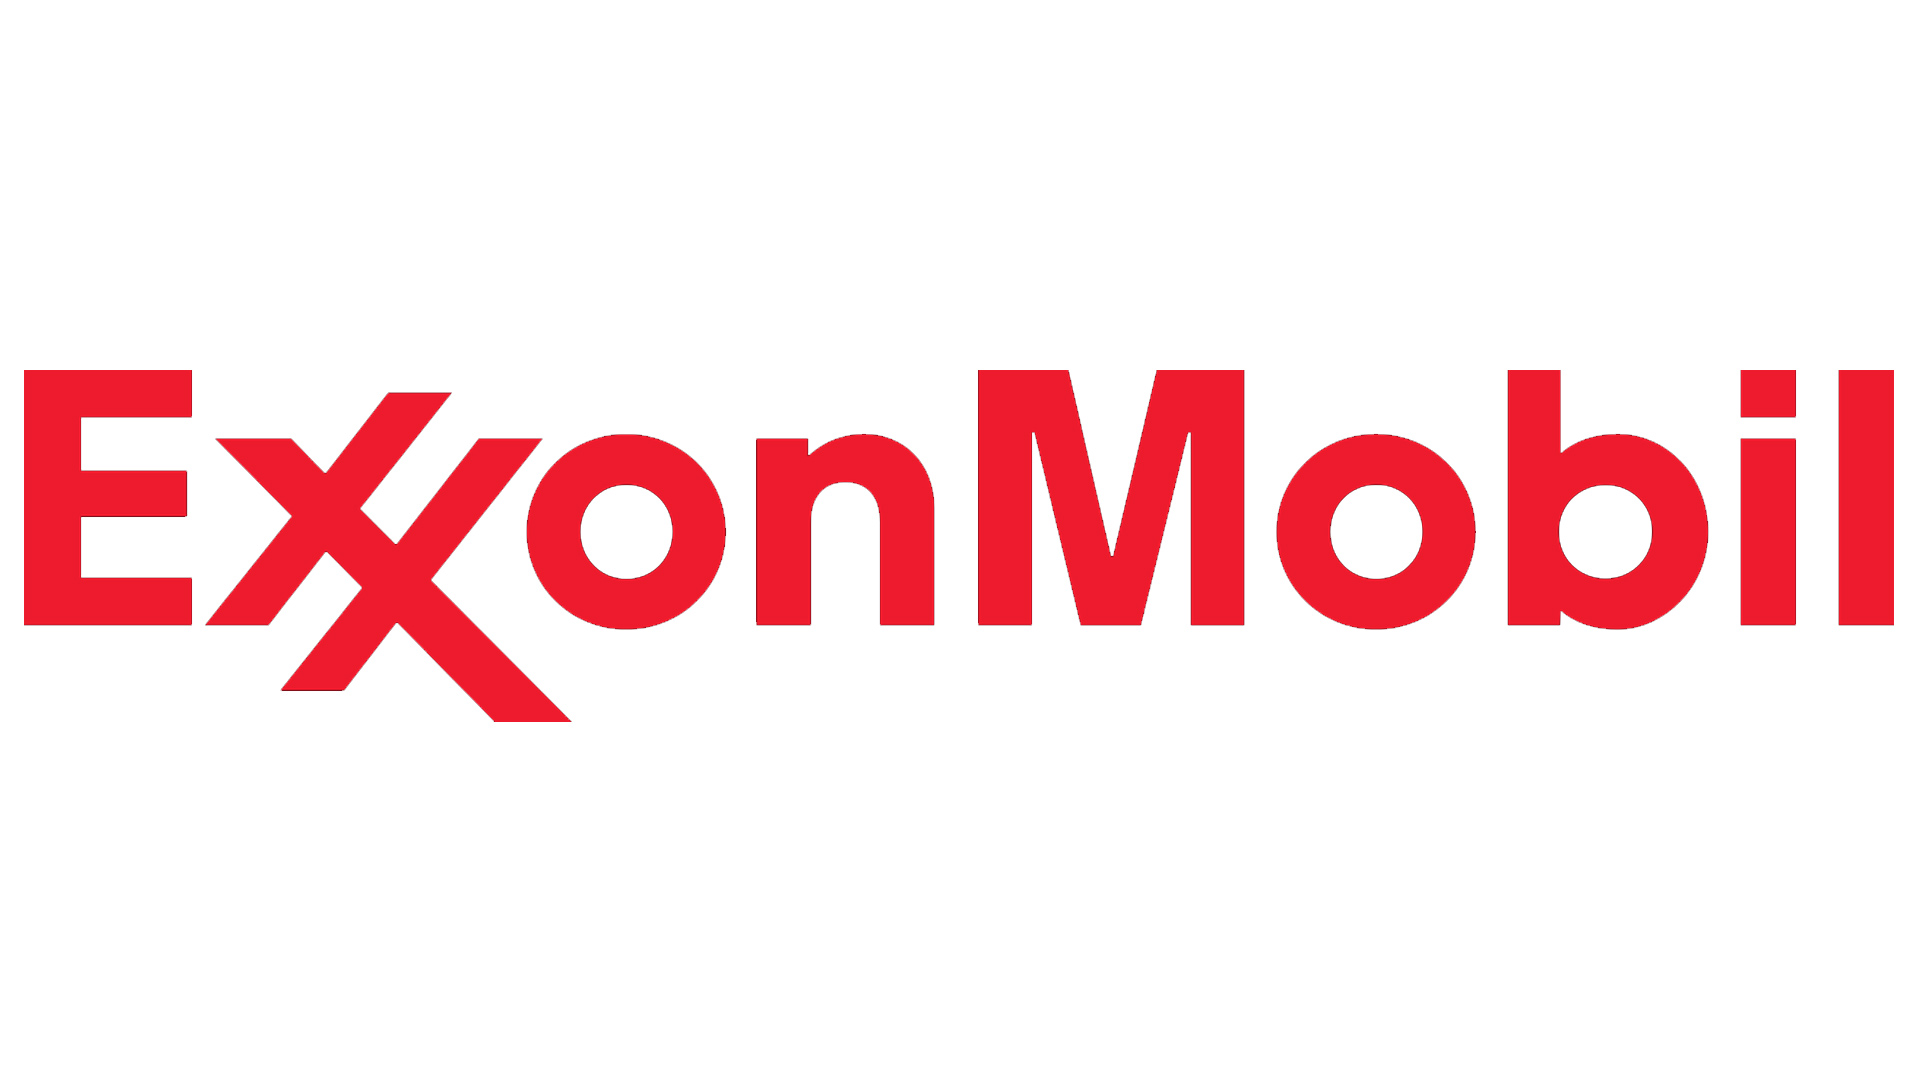 Exxonmobil Logo PNG Transparent Exxonmobil Logo.PNG Images..